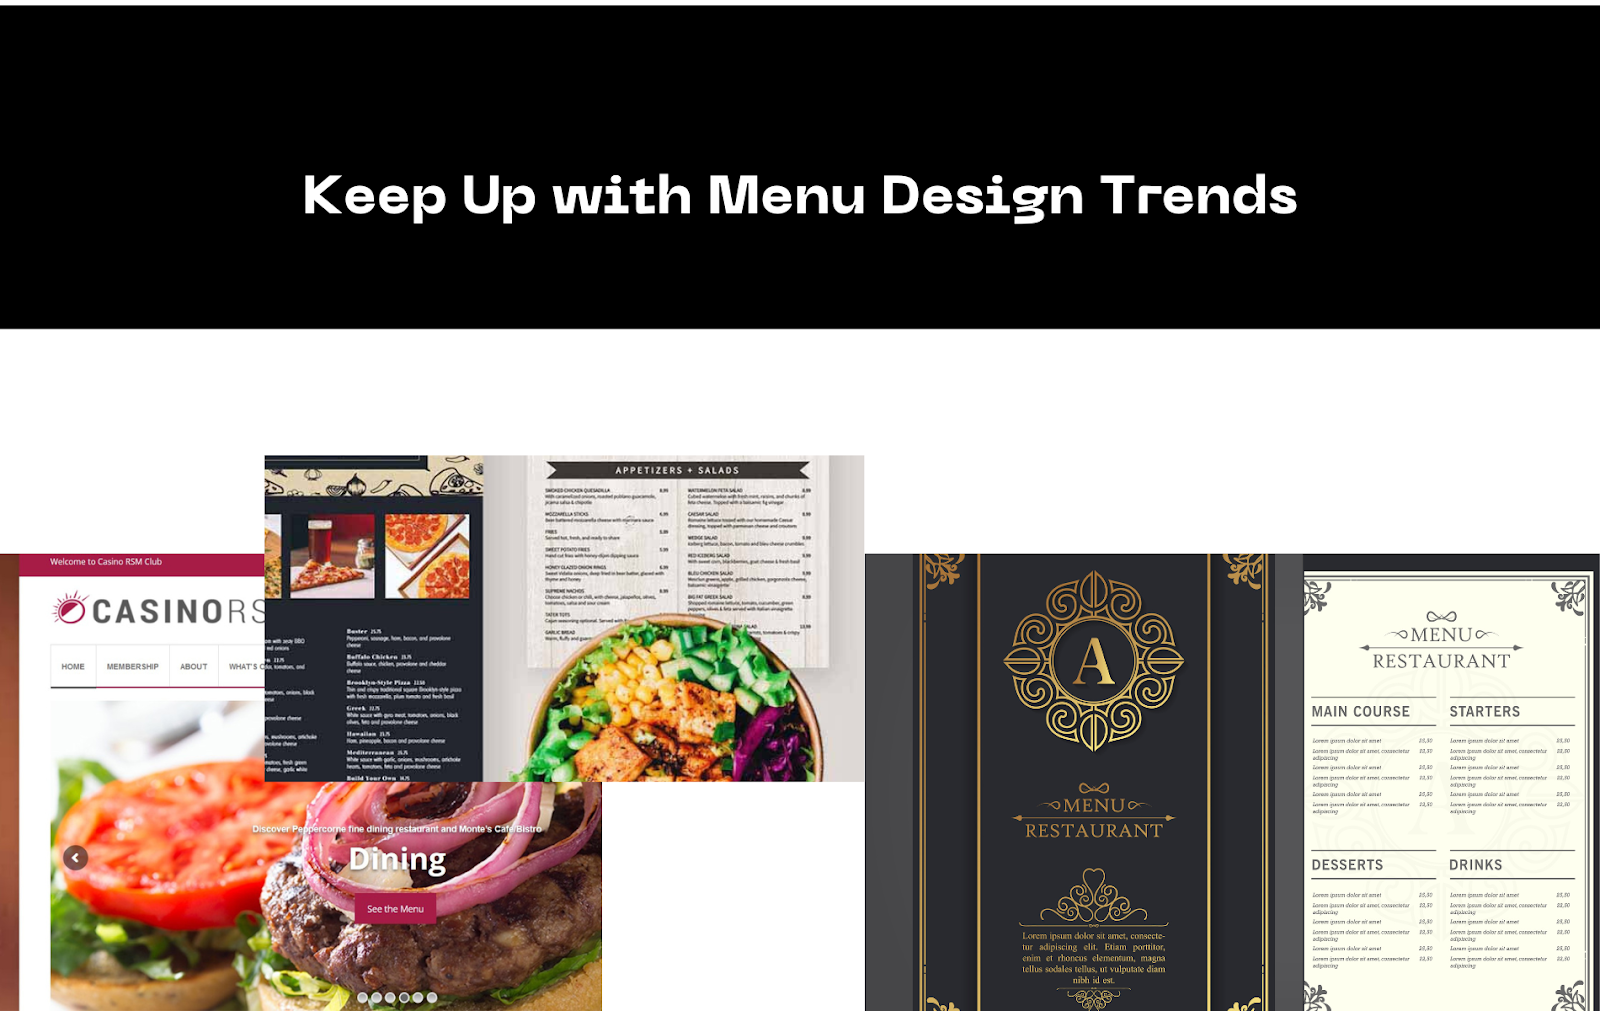 8 Functional Trends in Menu Design